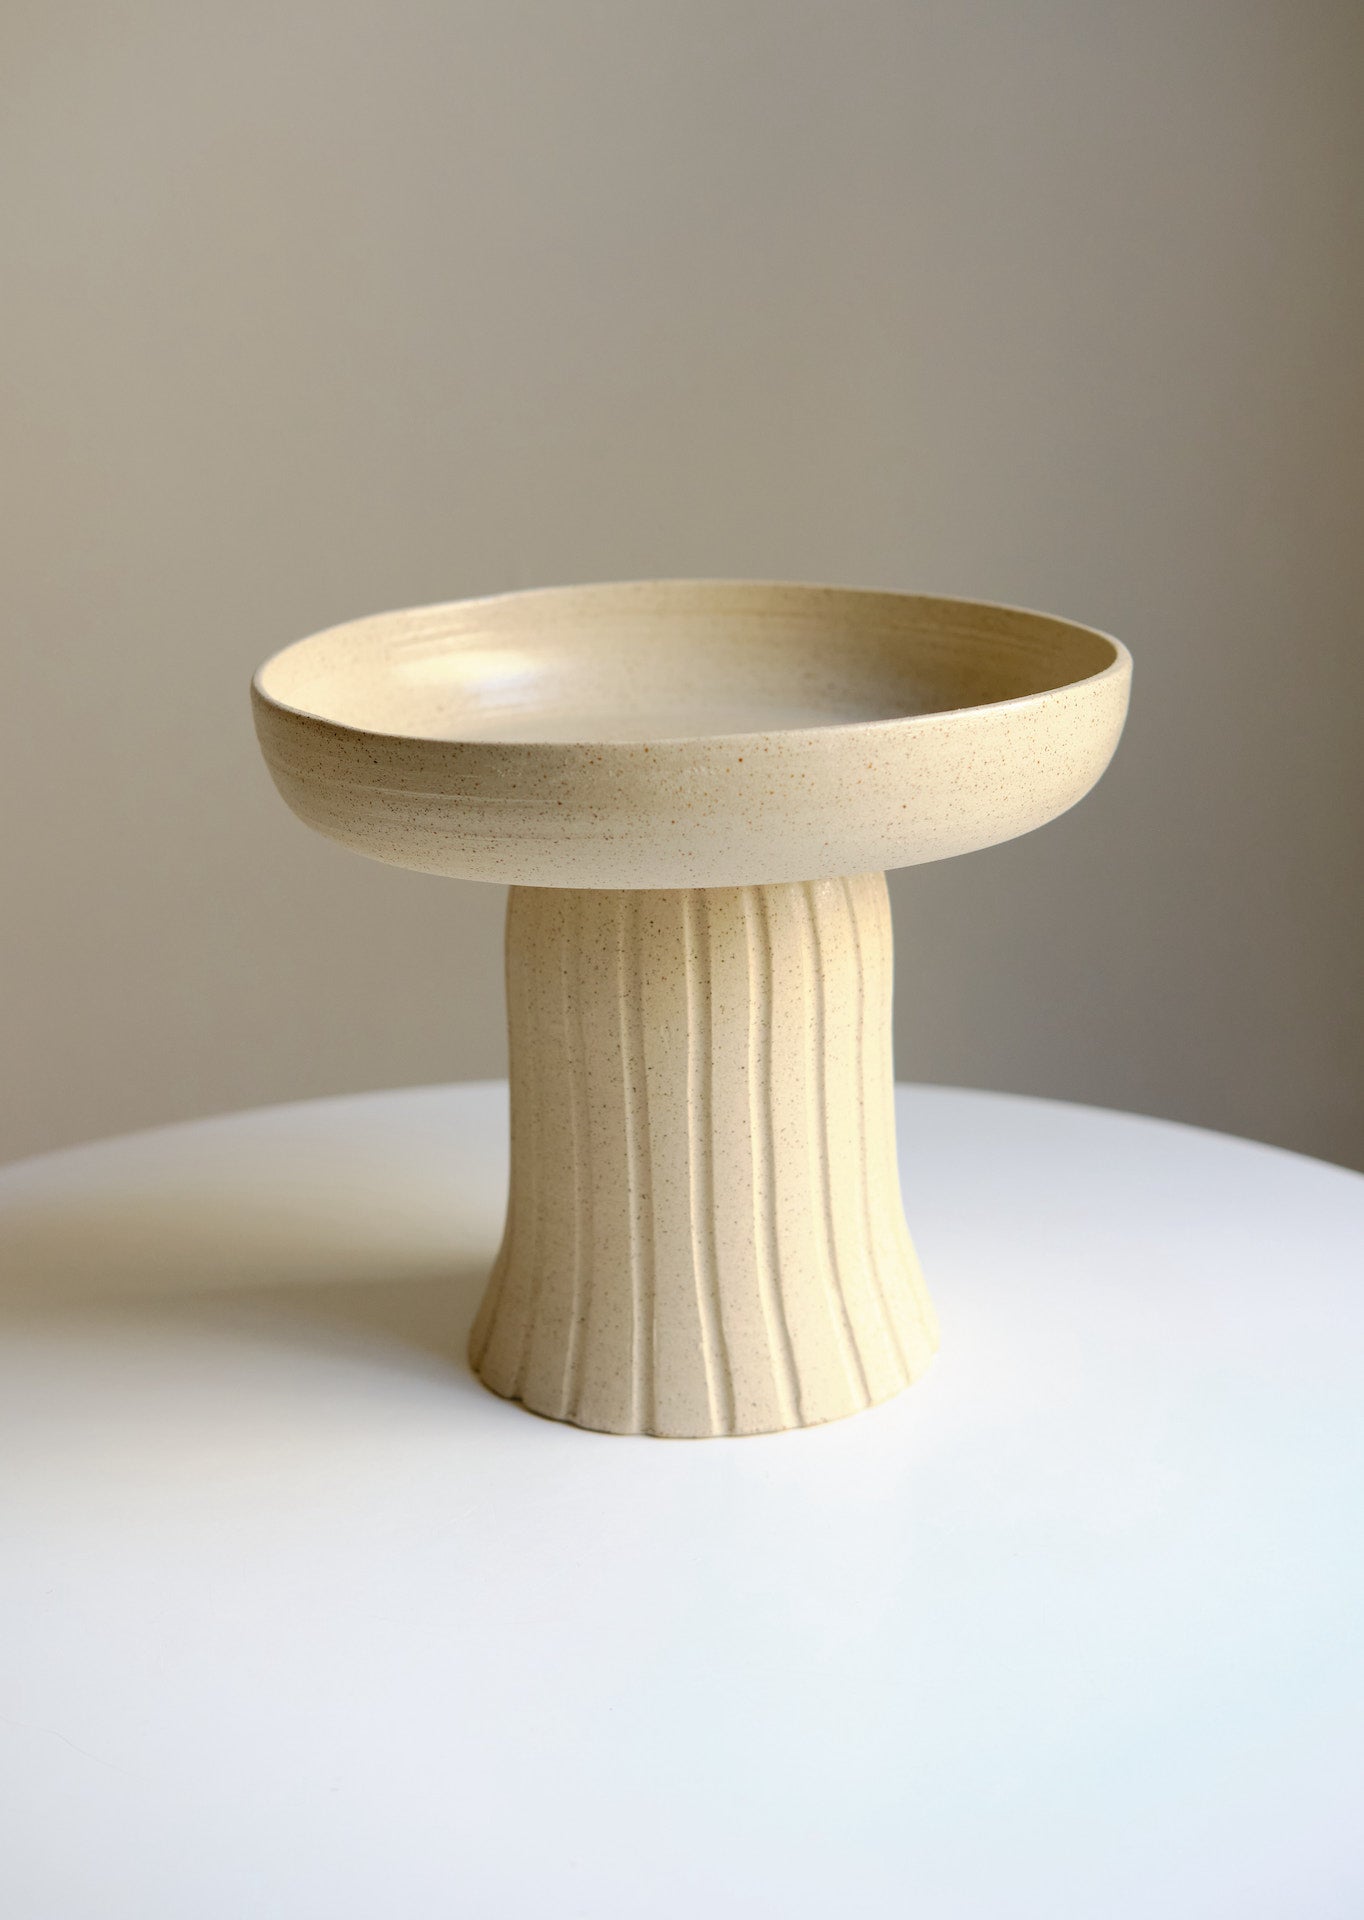 Pedestal bowl no. 1